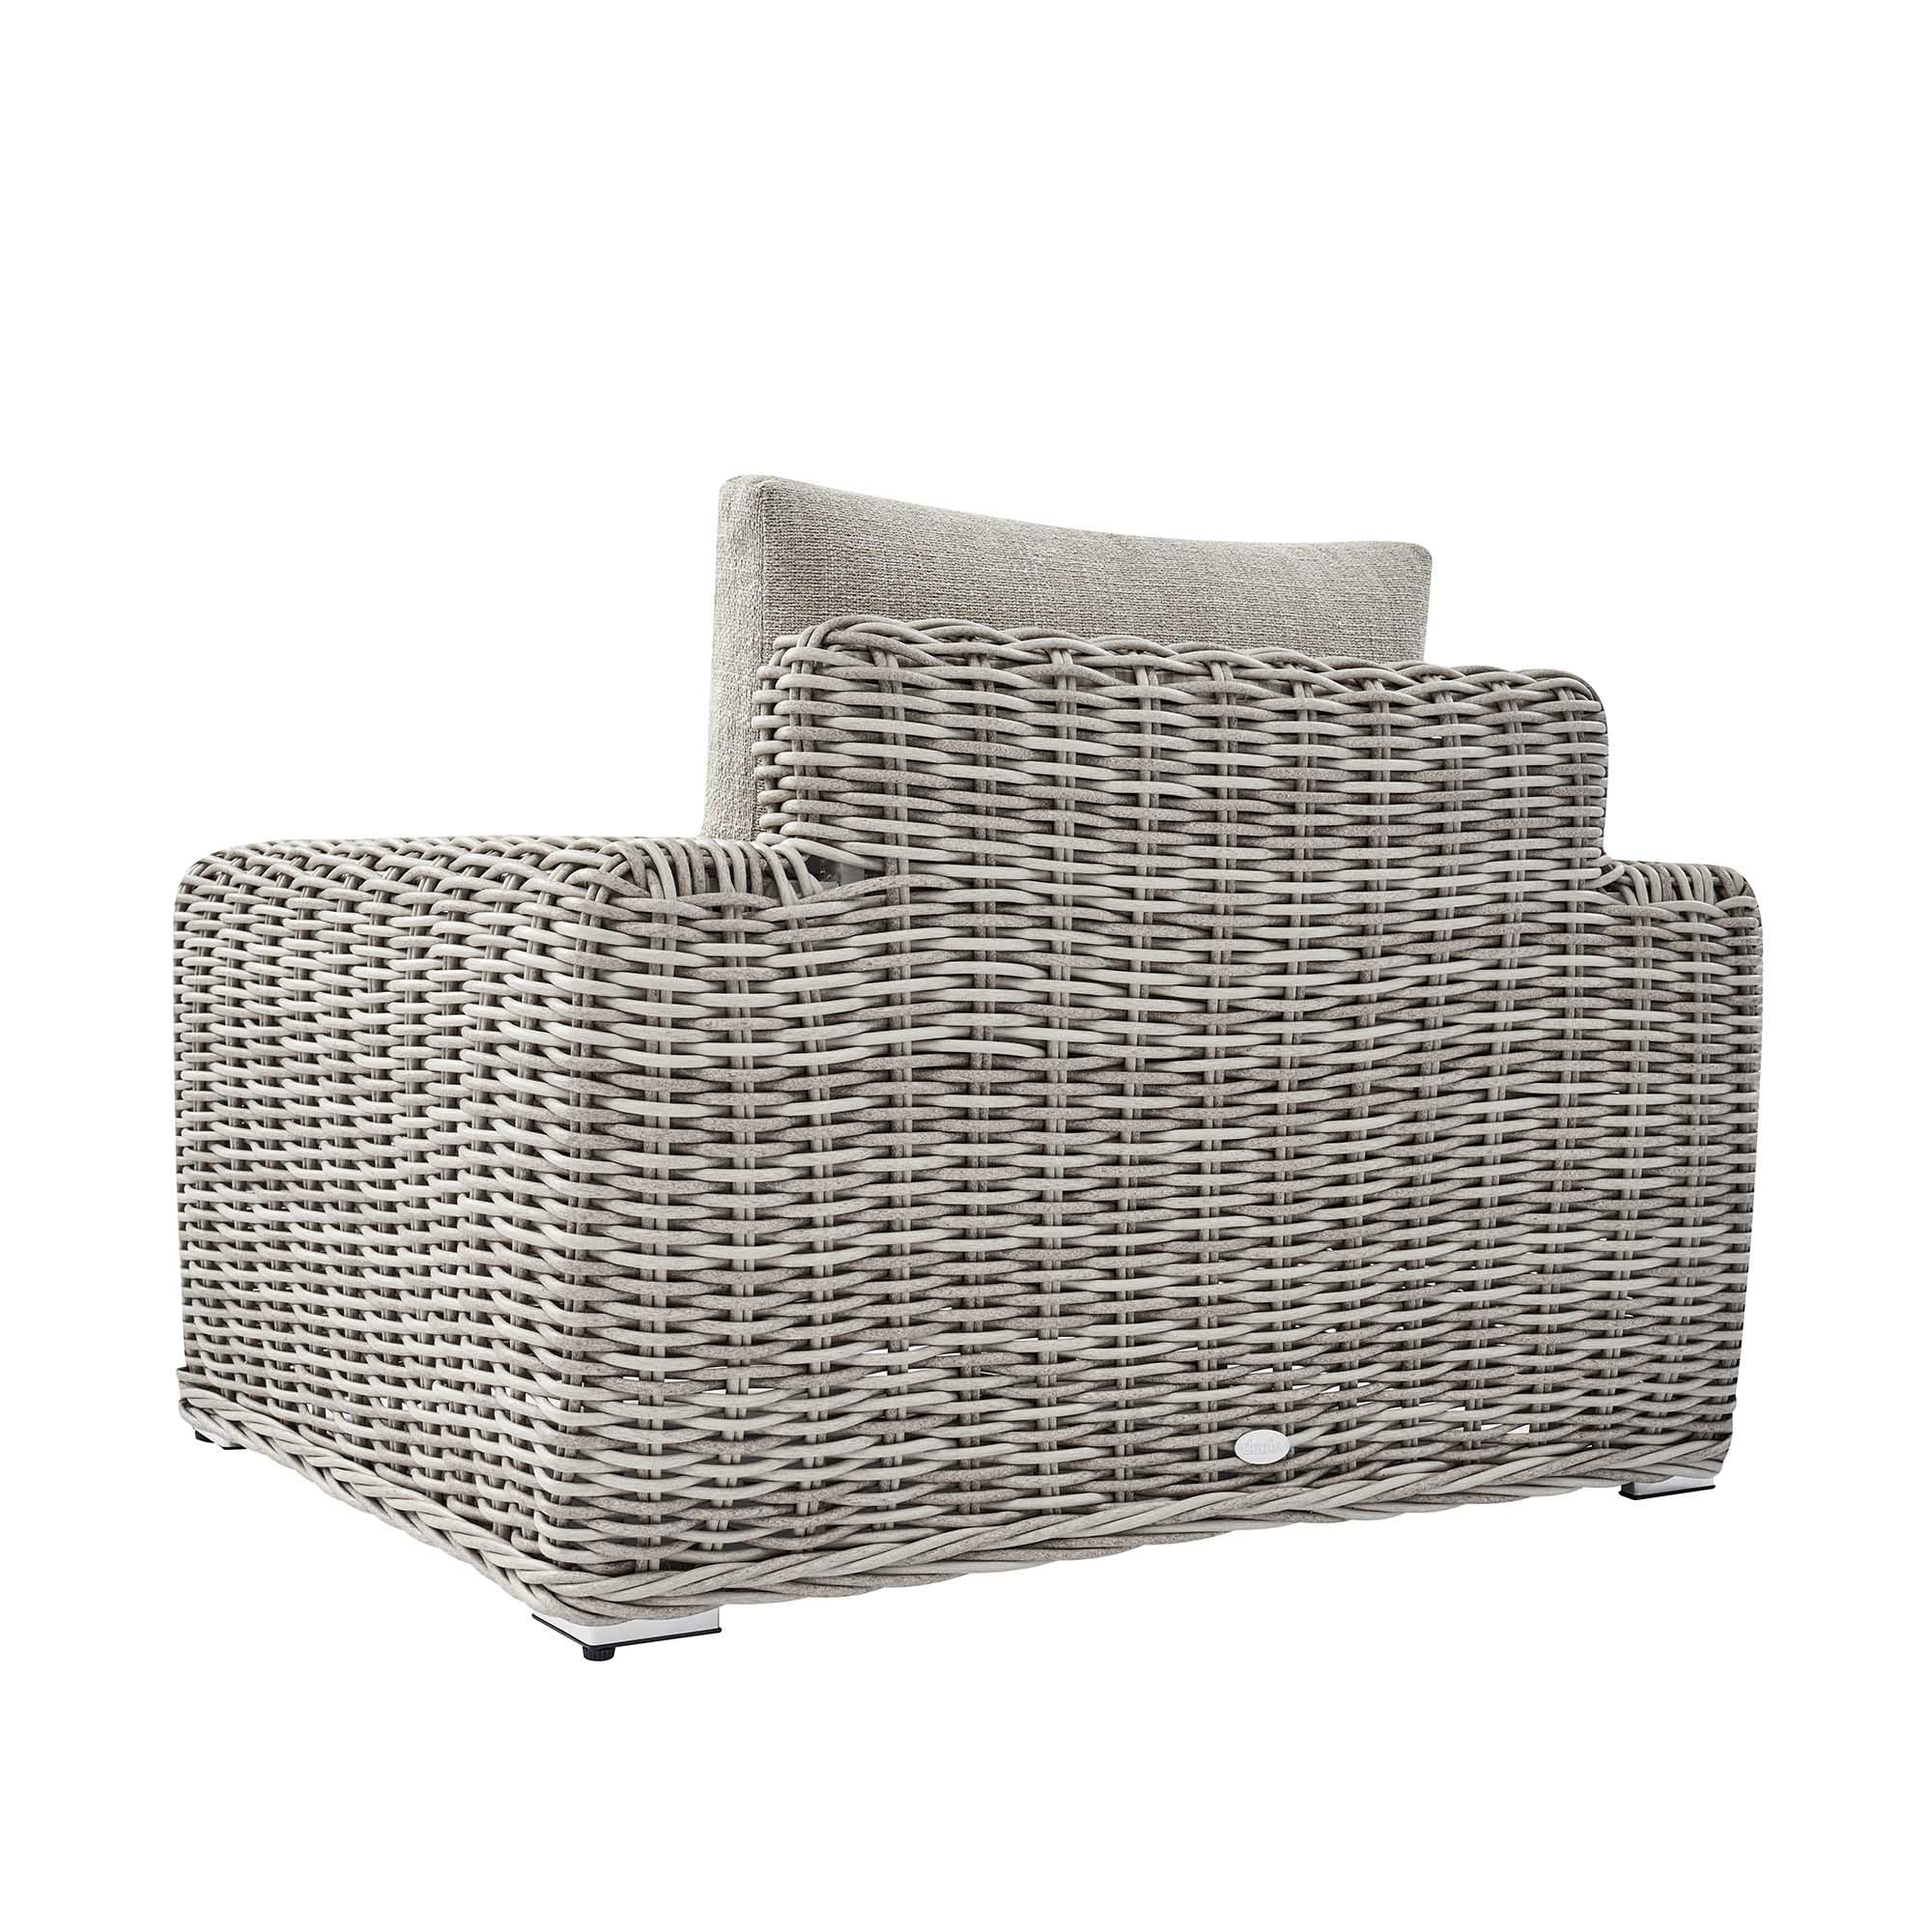 Bellagio Round Wicker Outdoor 1-Seater Sofa, Light Grey